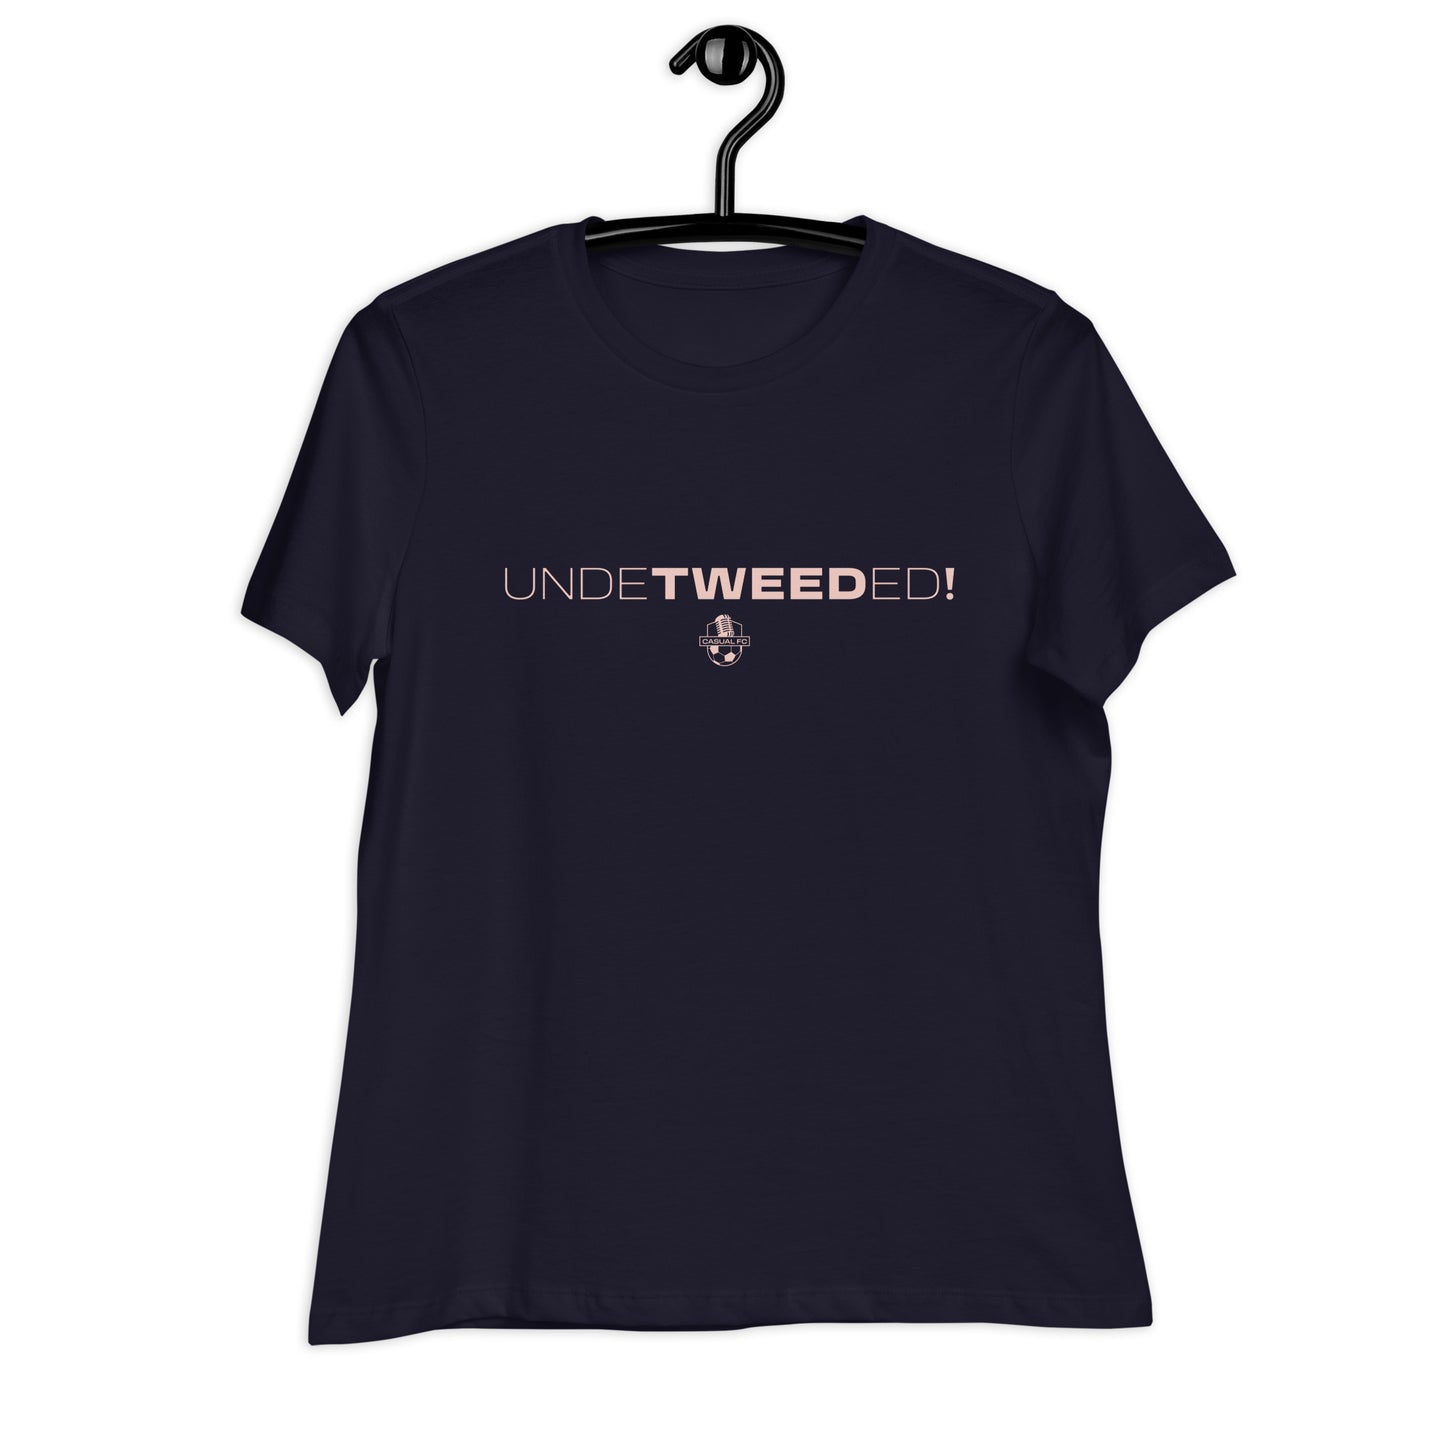 UndeTweeded! Women's Shirt